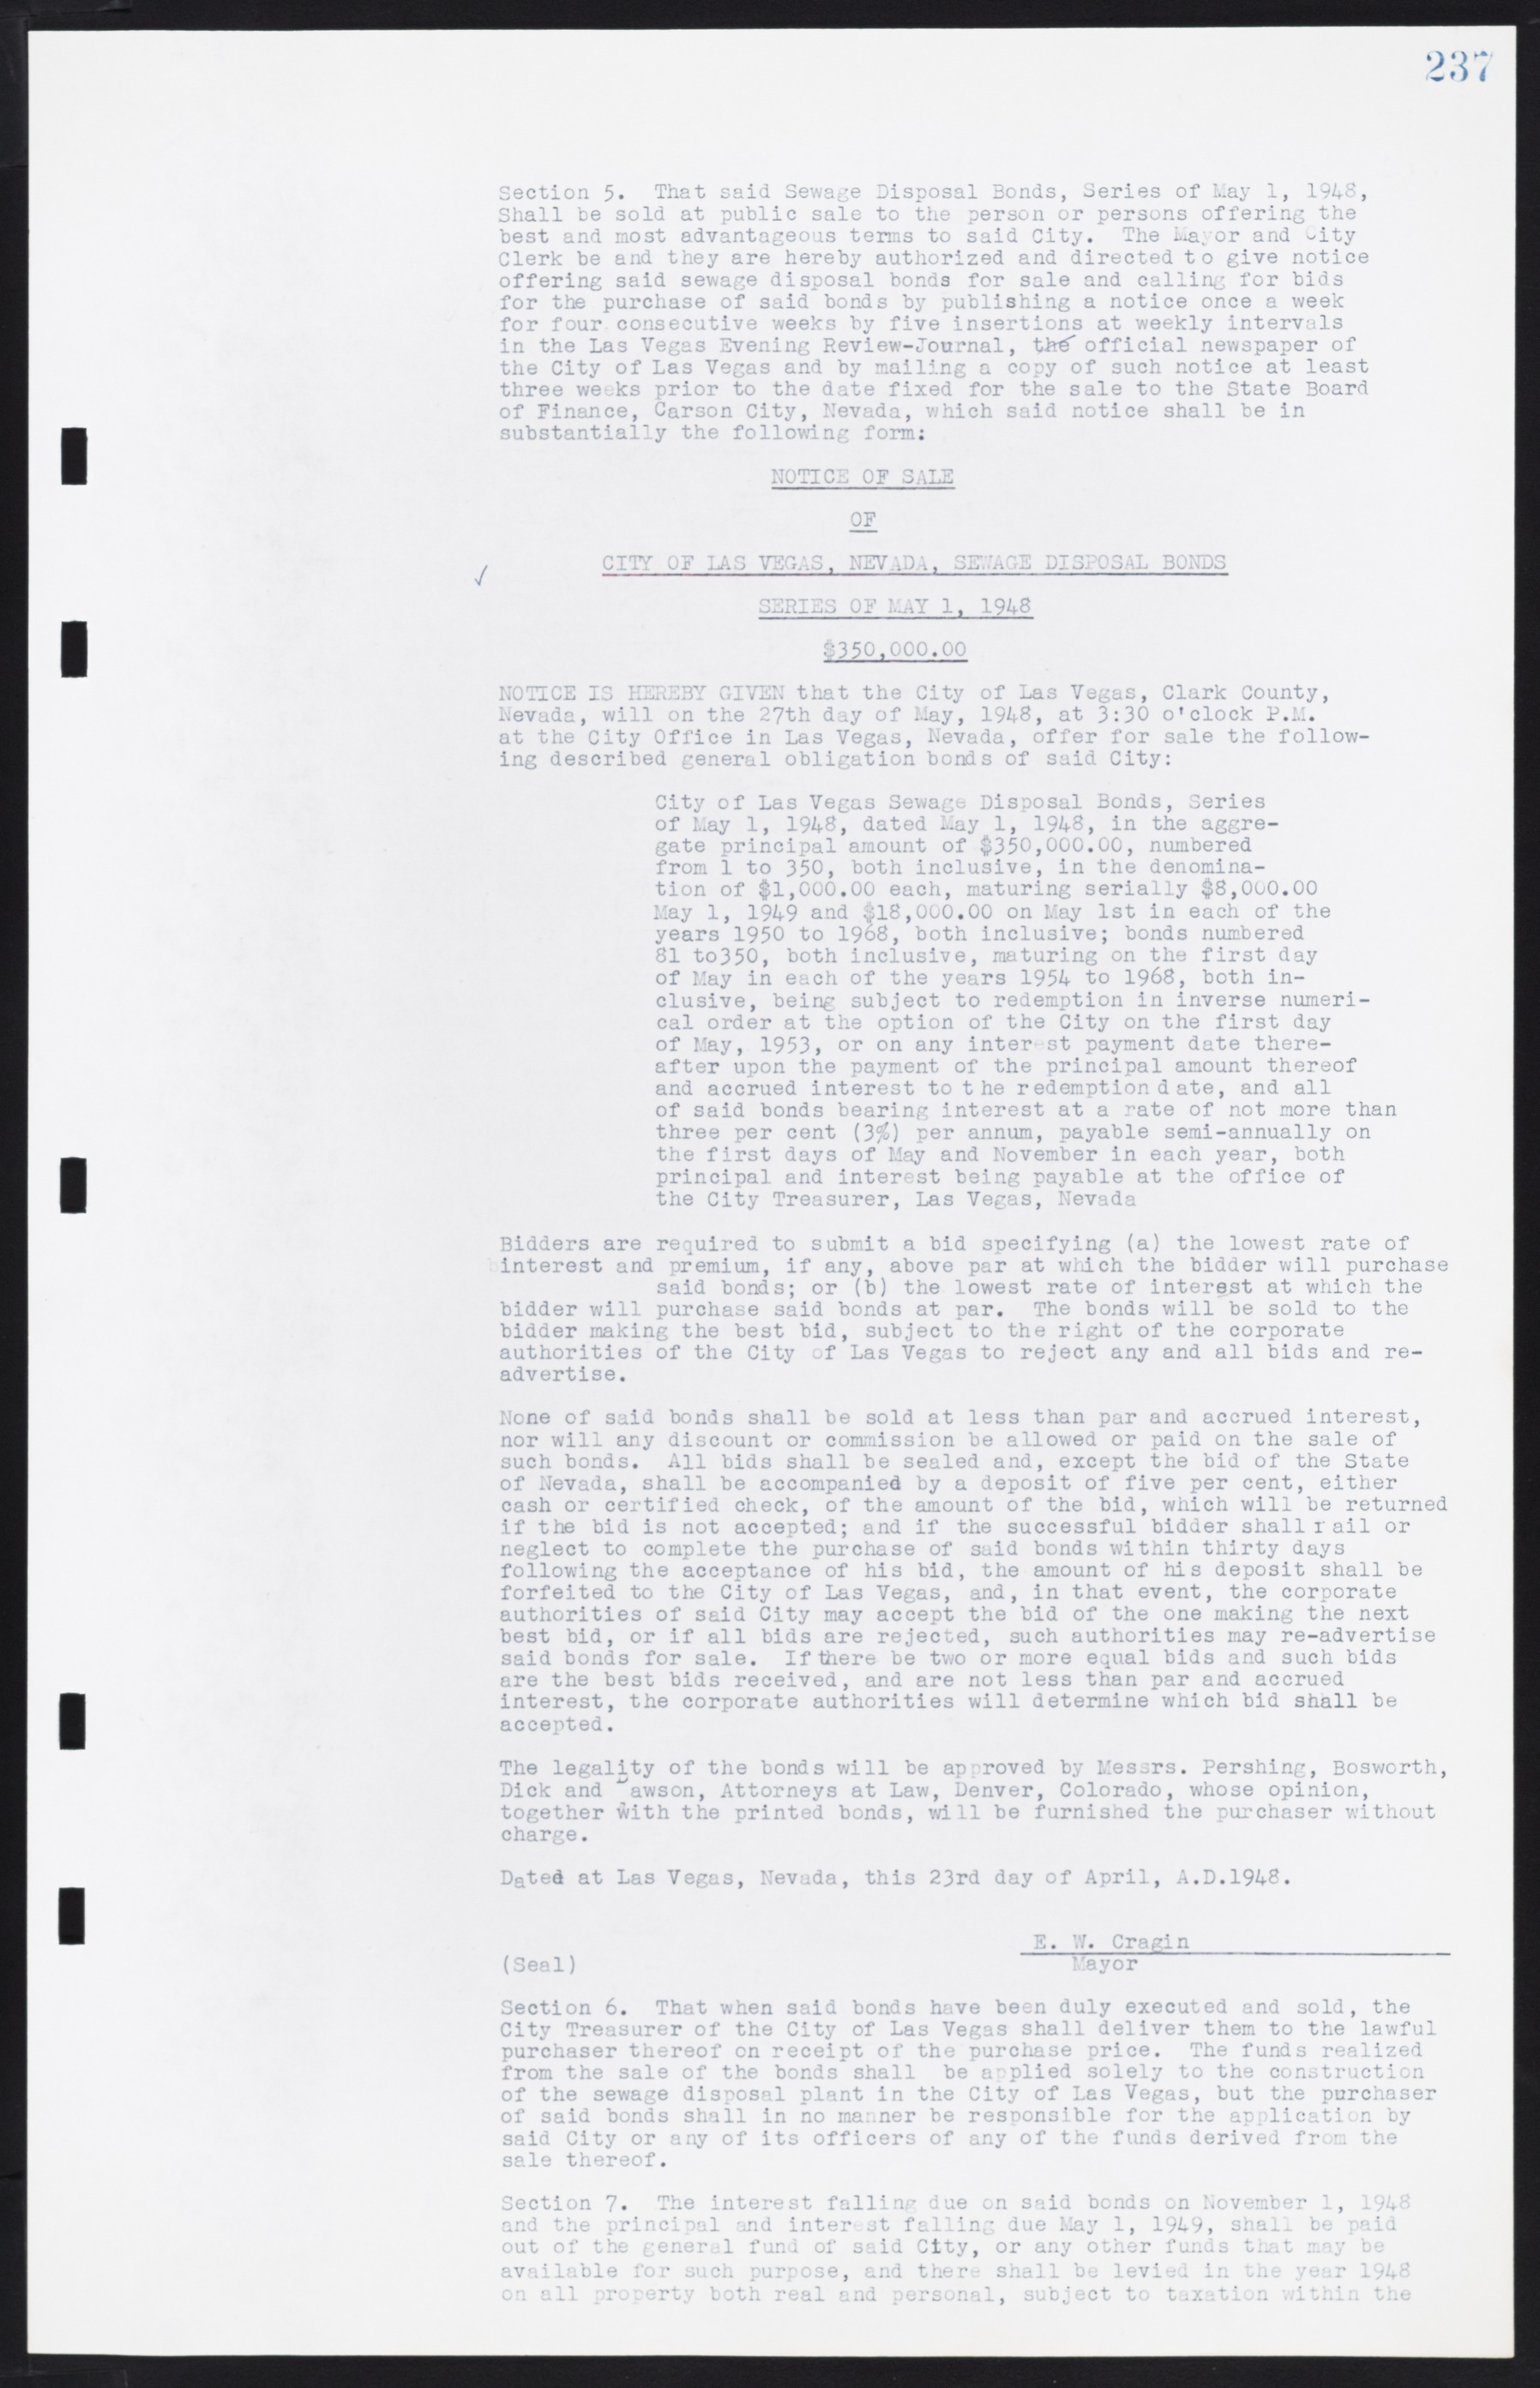 Las Vegas City Commission Minutes, January 7, 1947 to October 26, 1949, lvc000006-259